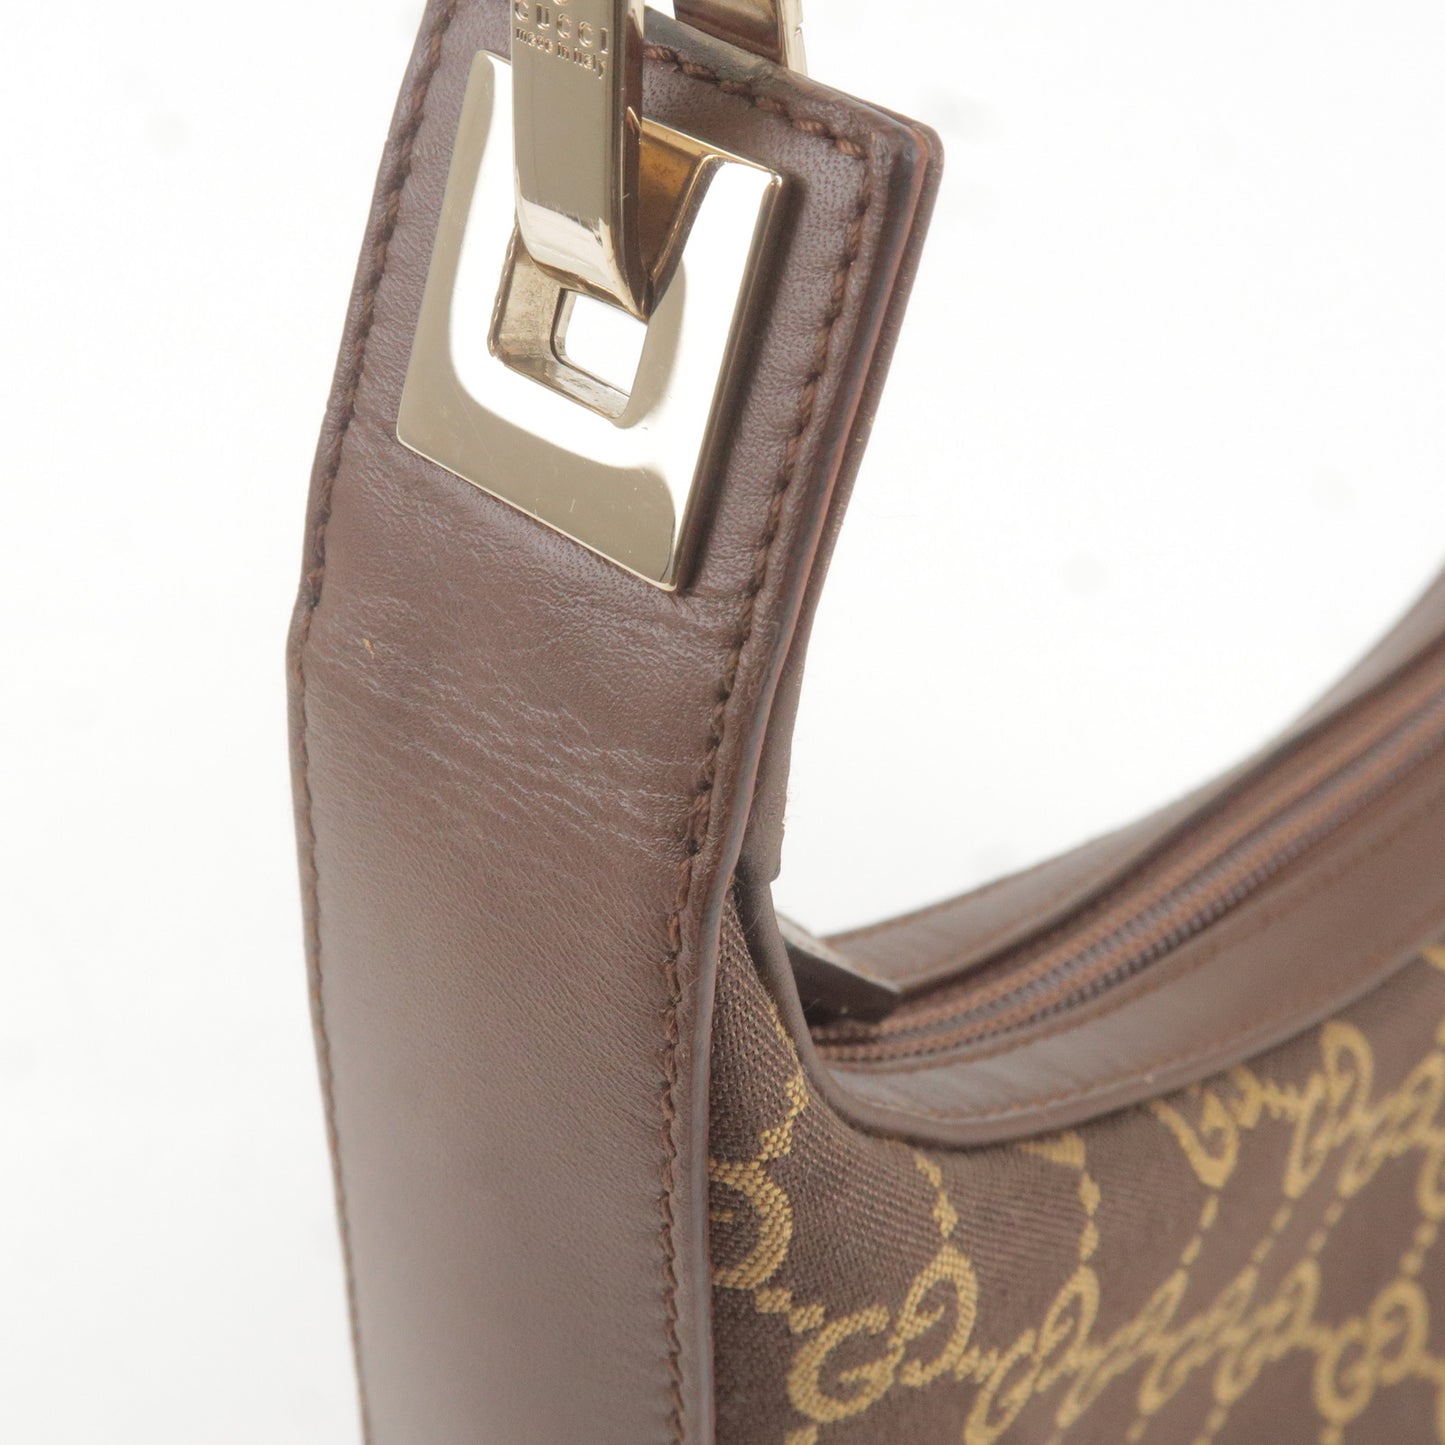 GUCCI GG Canvas Leather Shoulder Bag Brown Beige 001.4204